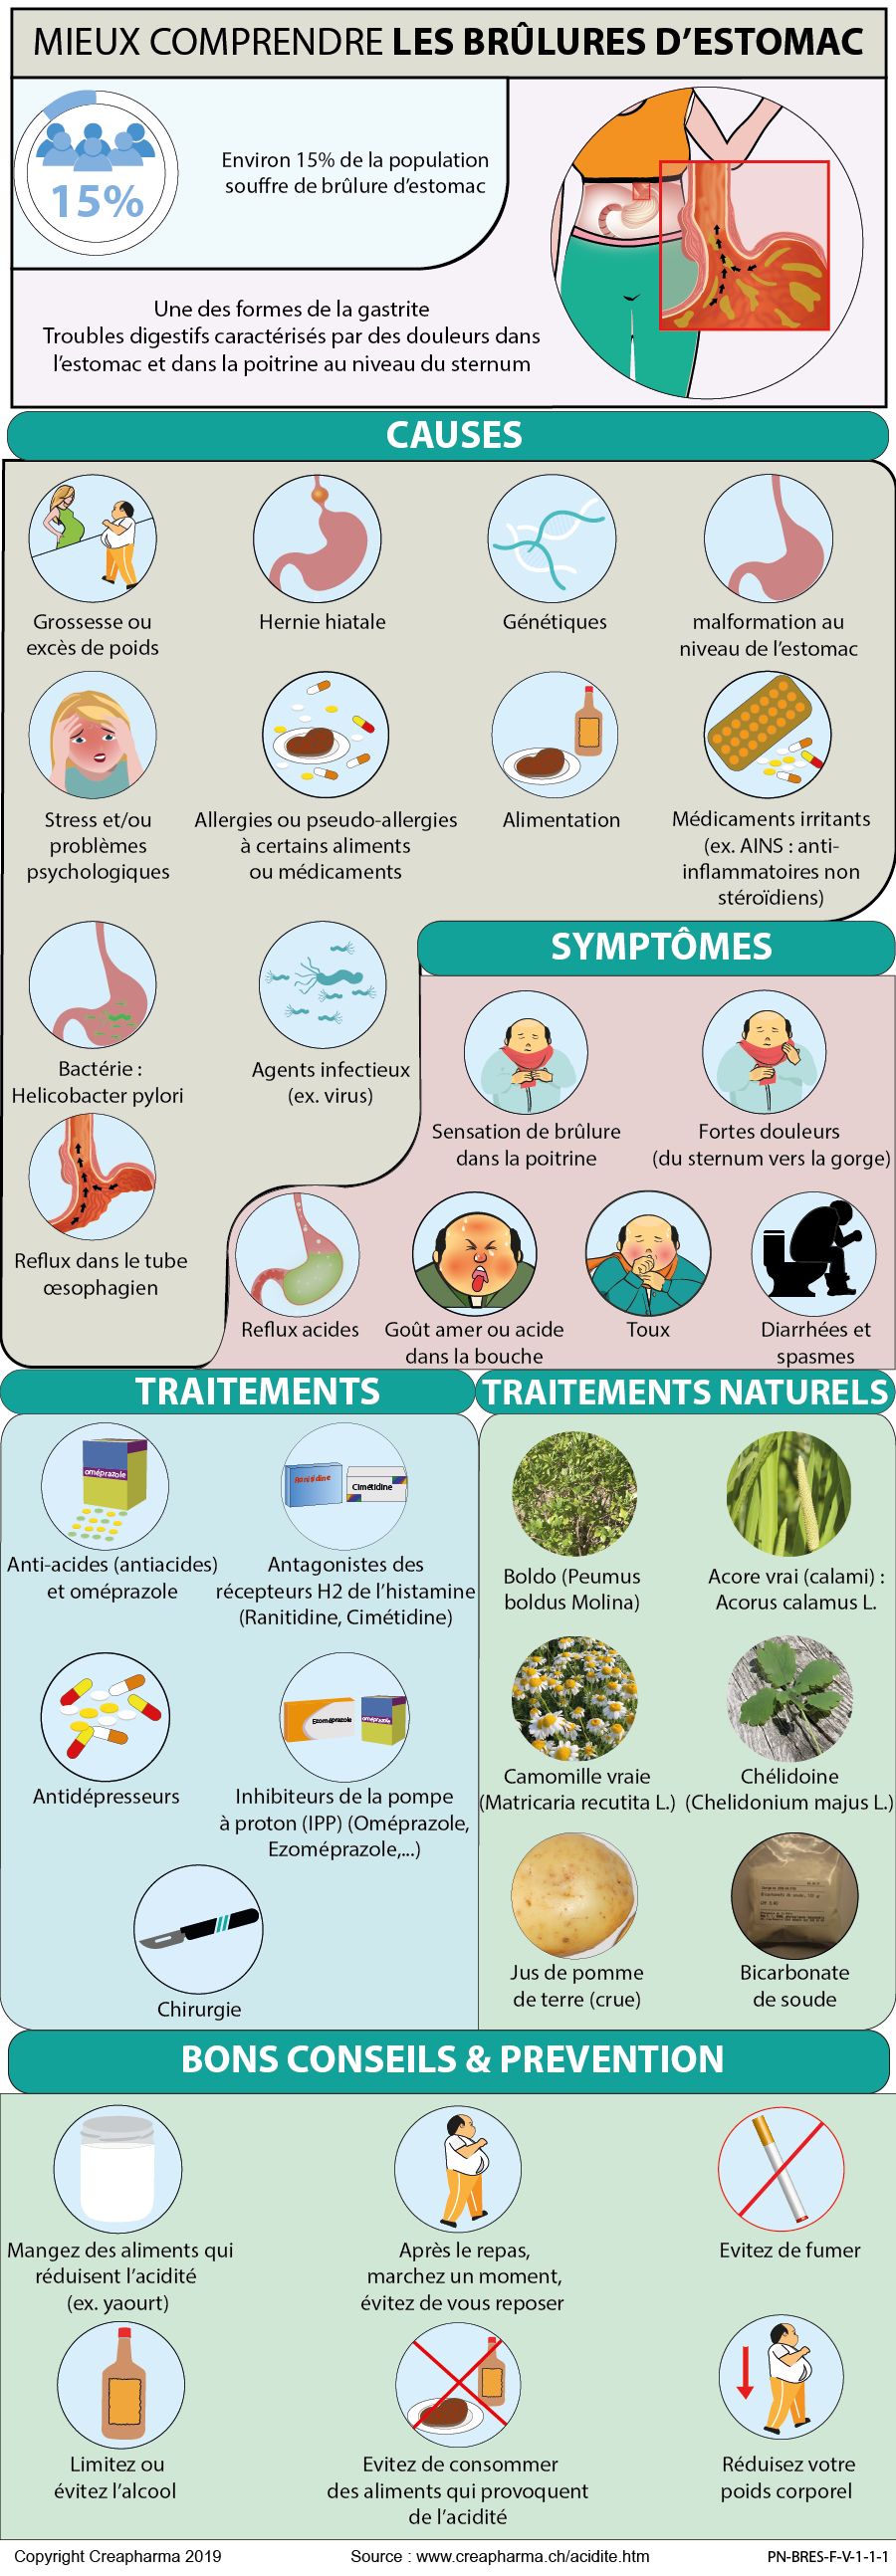 Brûlures d'estomac : symptômes & traitements | Creapharma